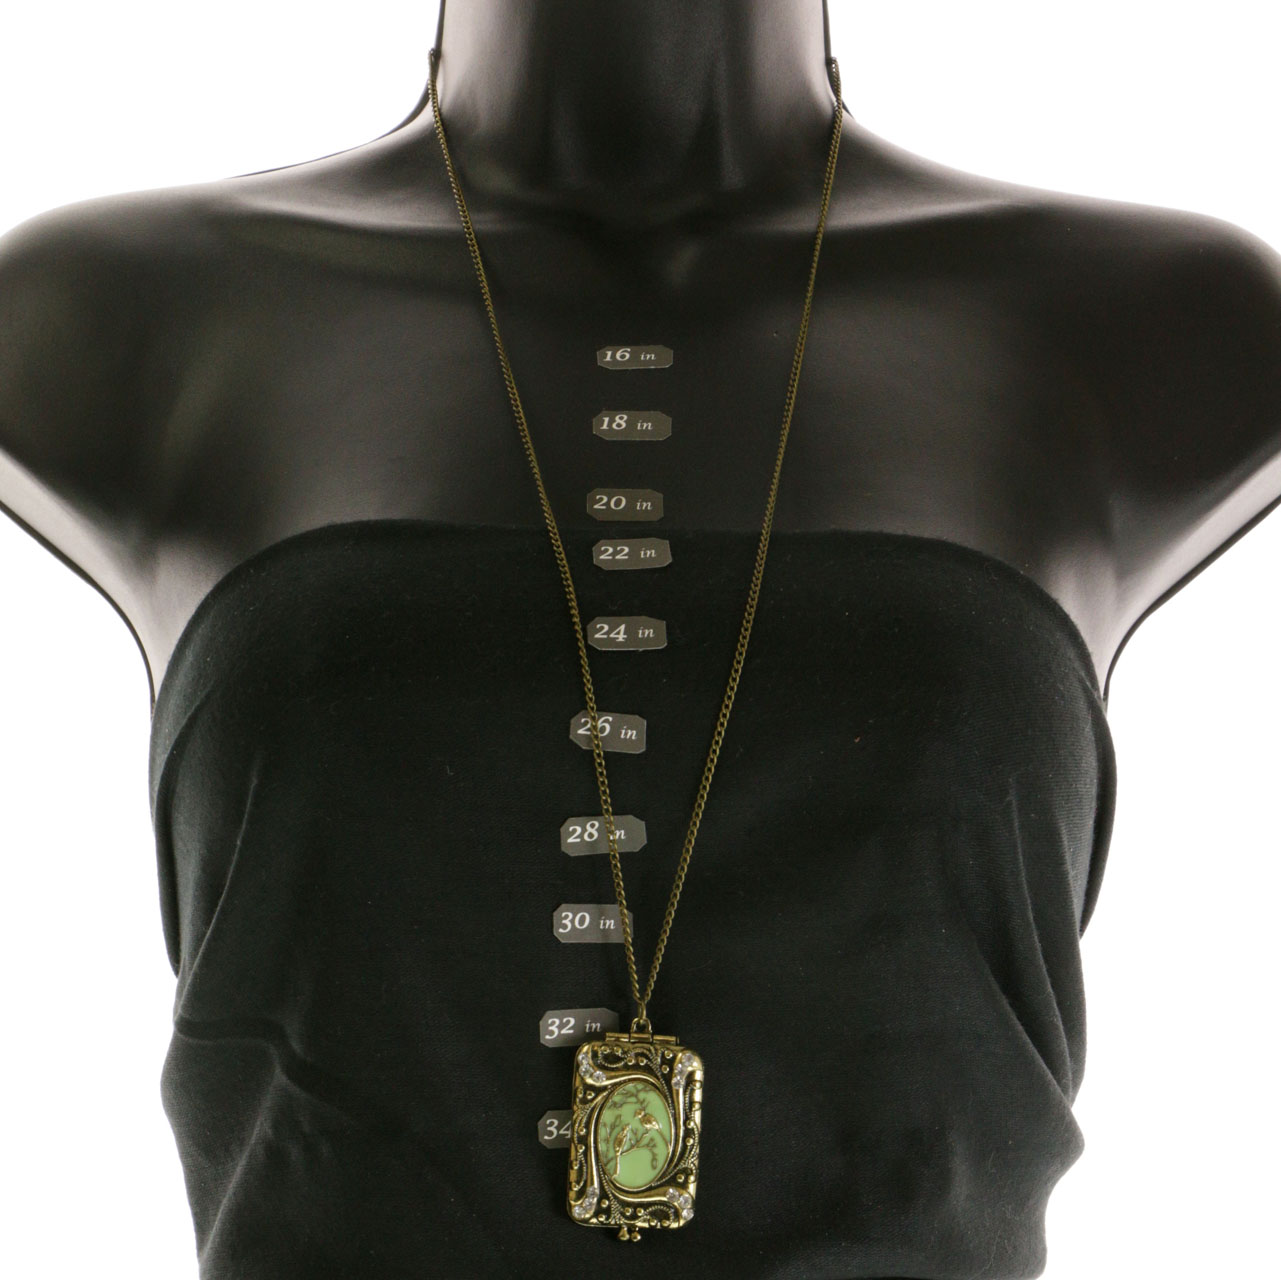 Mi Amore Birds Locket Adjustable Pendant-Necklace Gold-Tone & Green